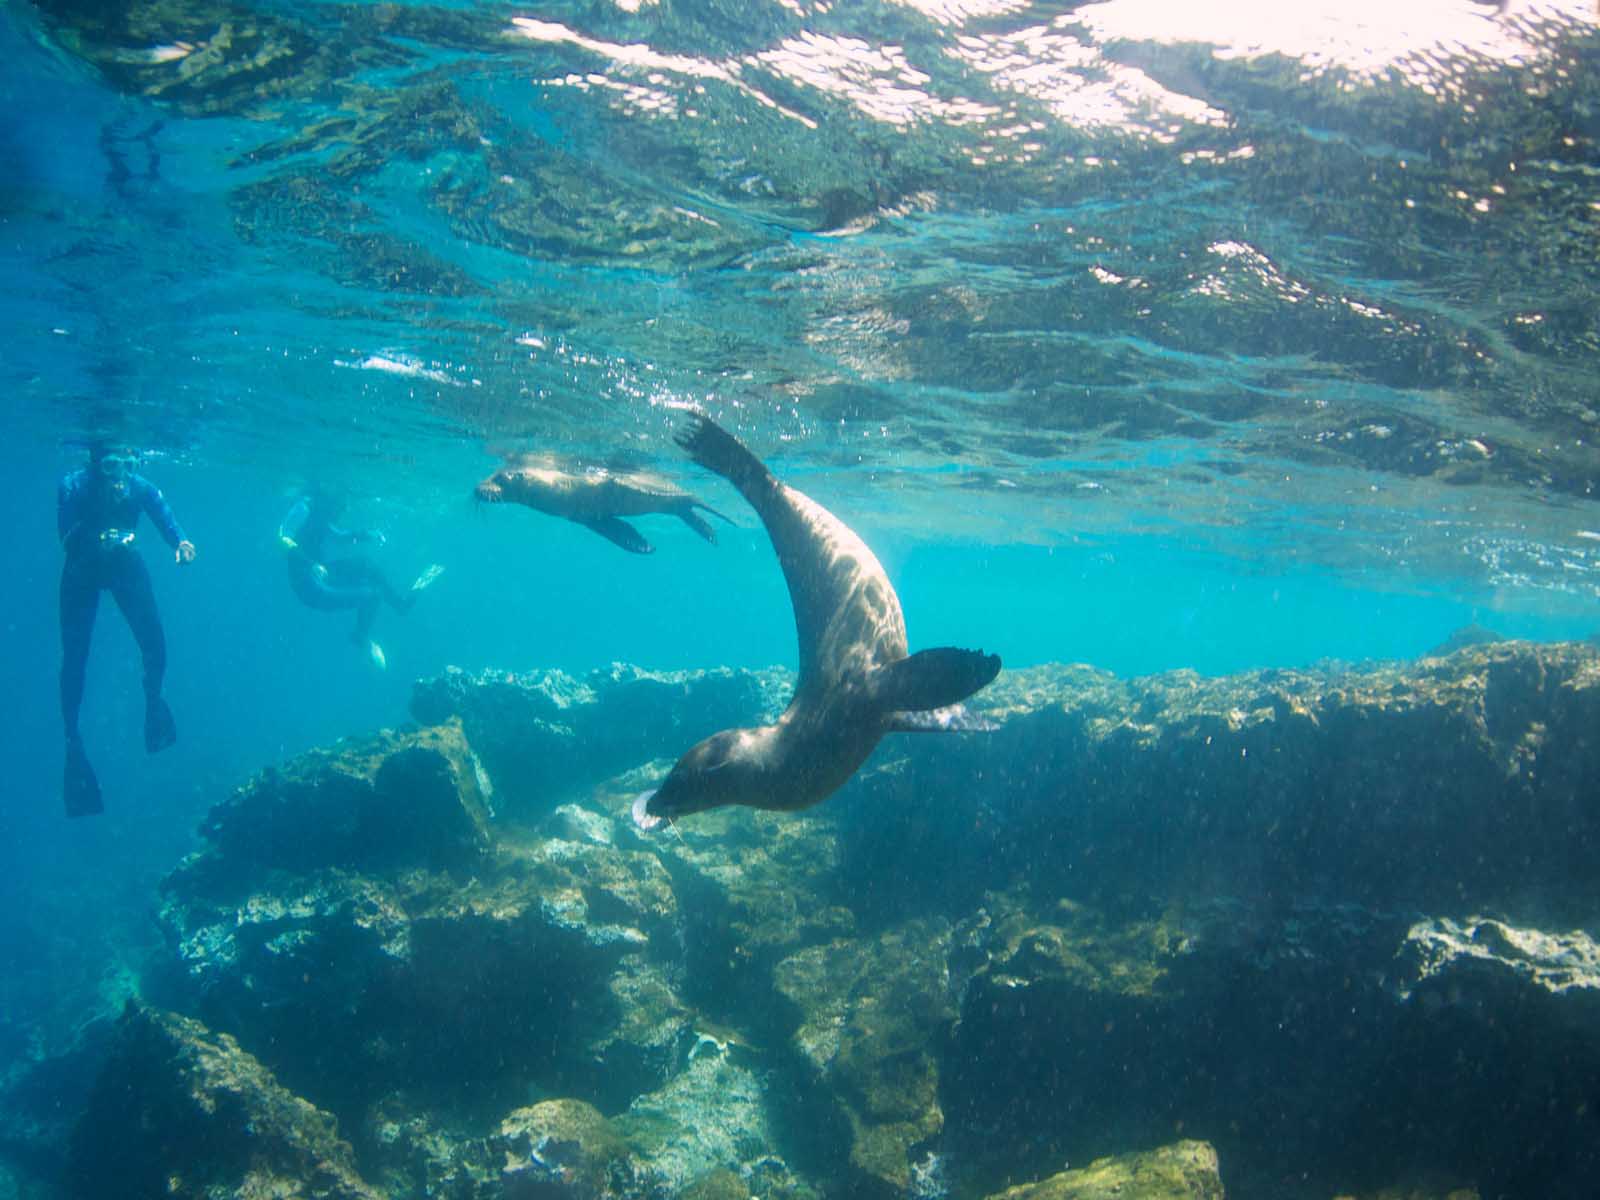  Galapagos | Snorkeling vs. Diving in the Galapagos Islands